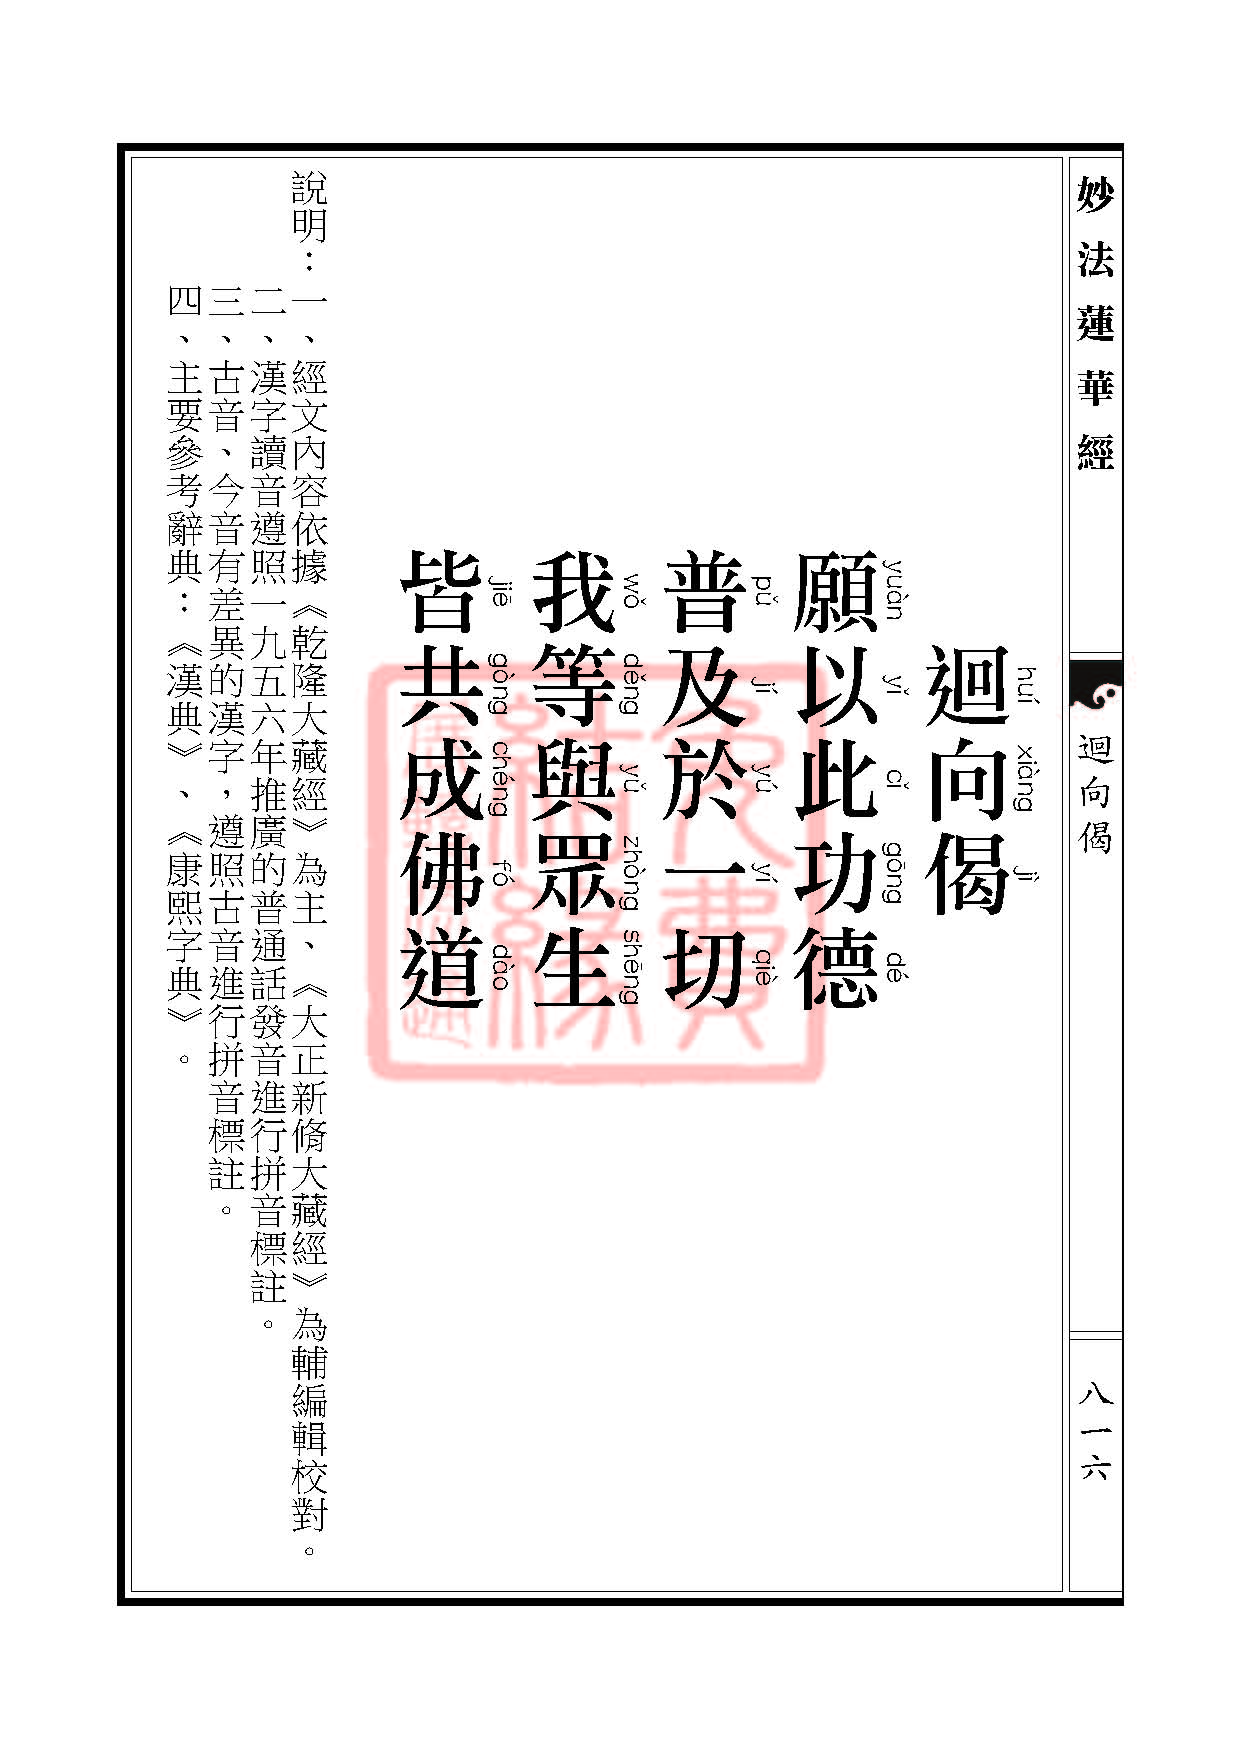 Book_FHJ_HK-A6-PY_Web__816.jpg